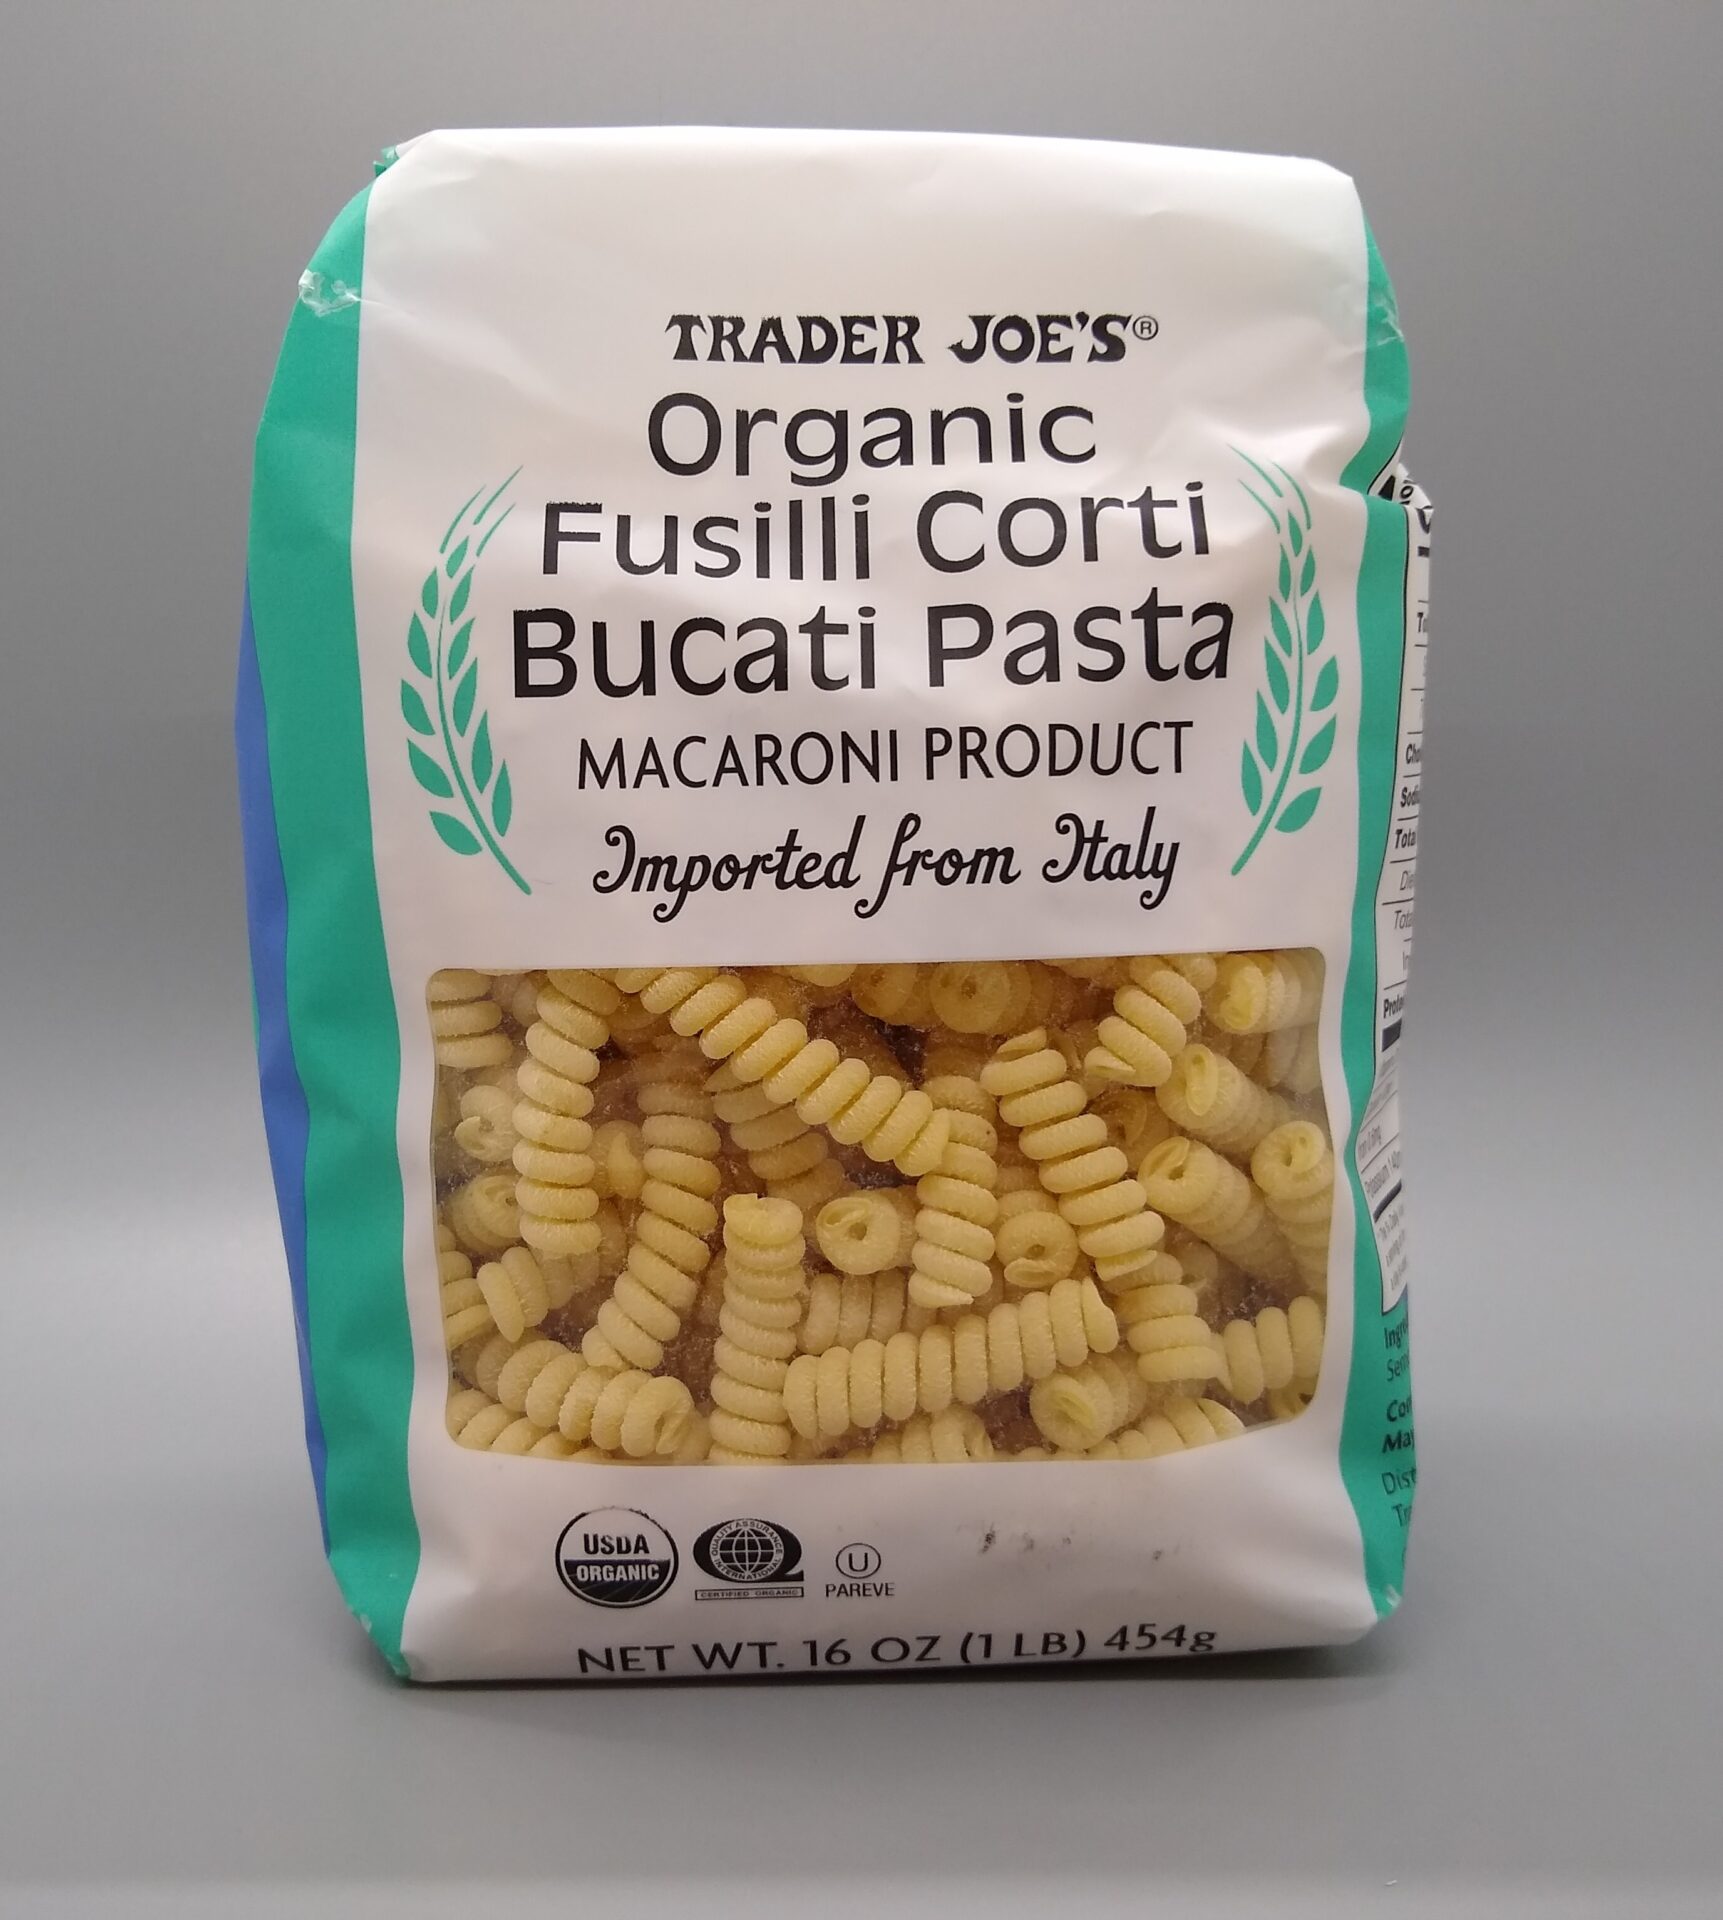 Trader Joe's Organic Fusilli Corti Bucati Pasta